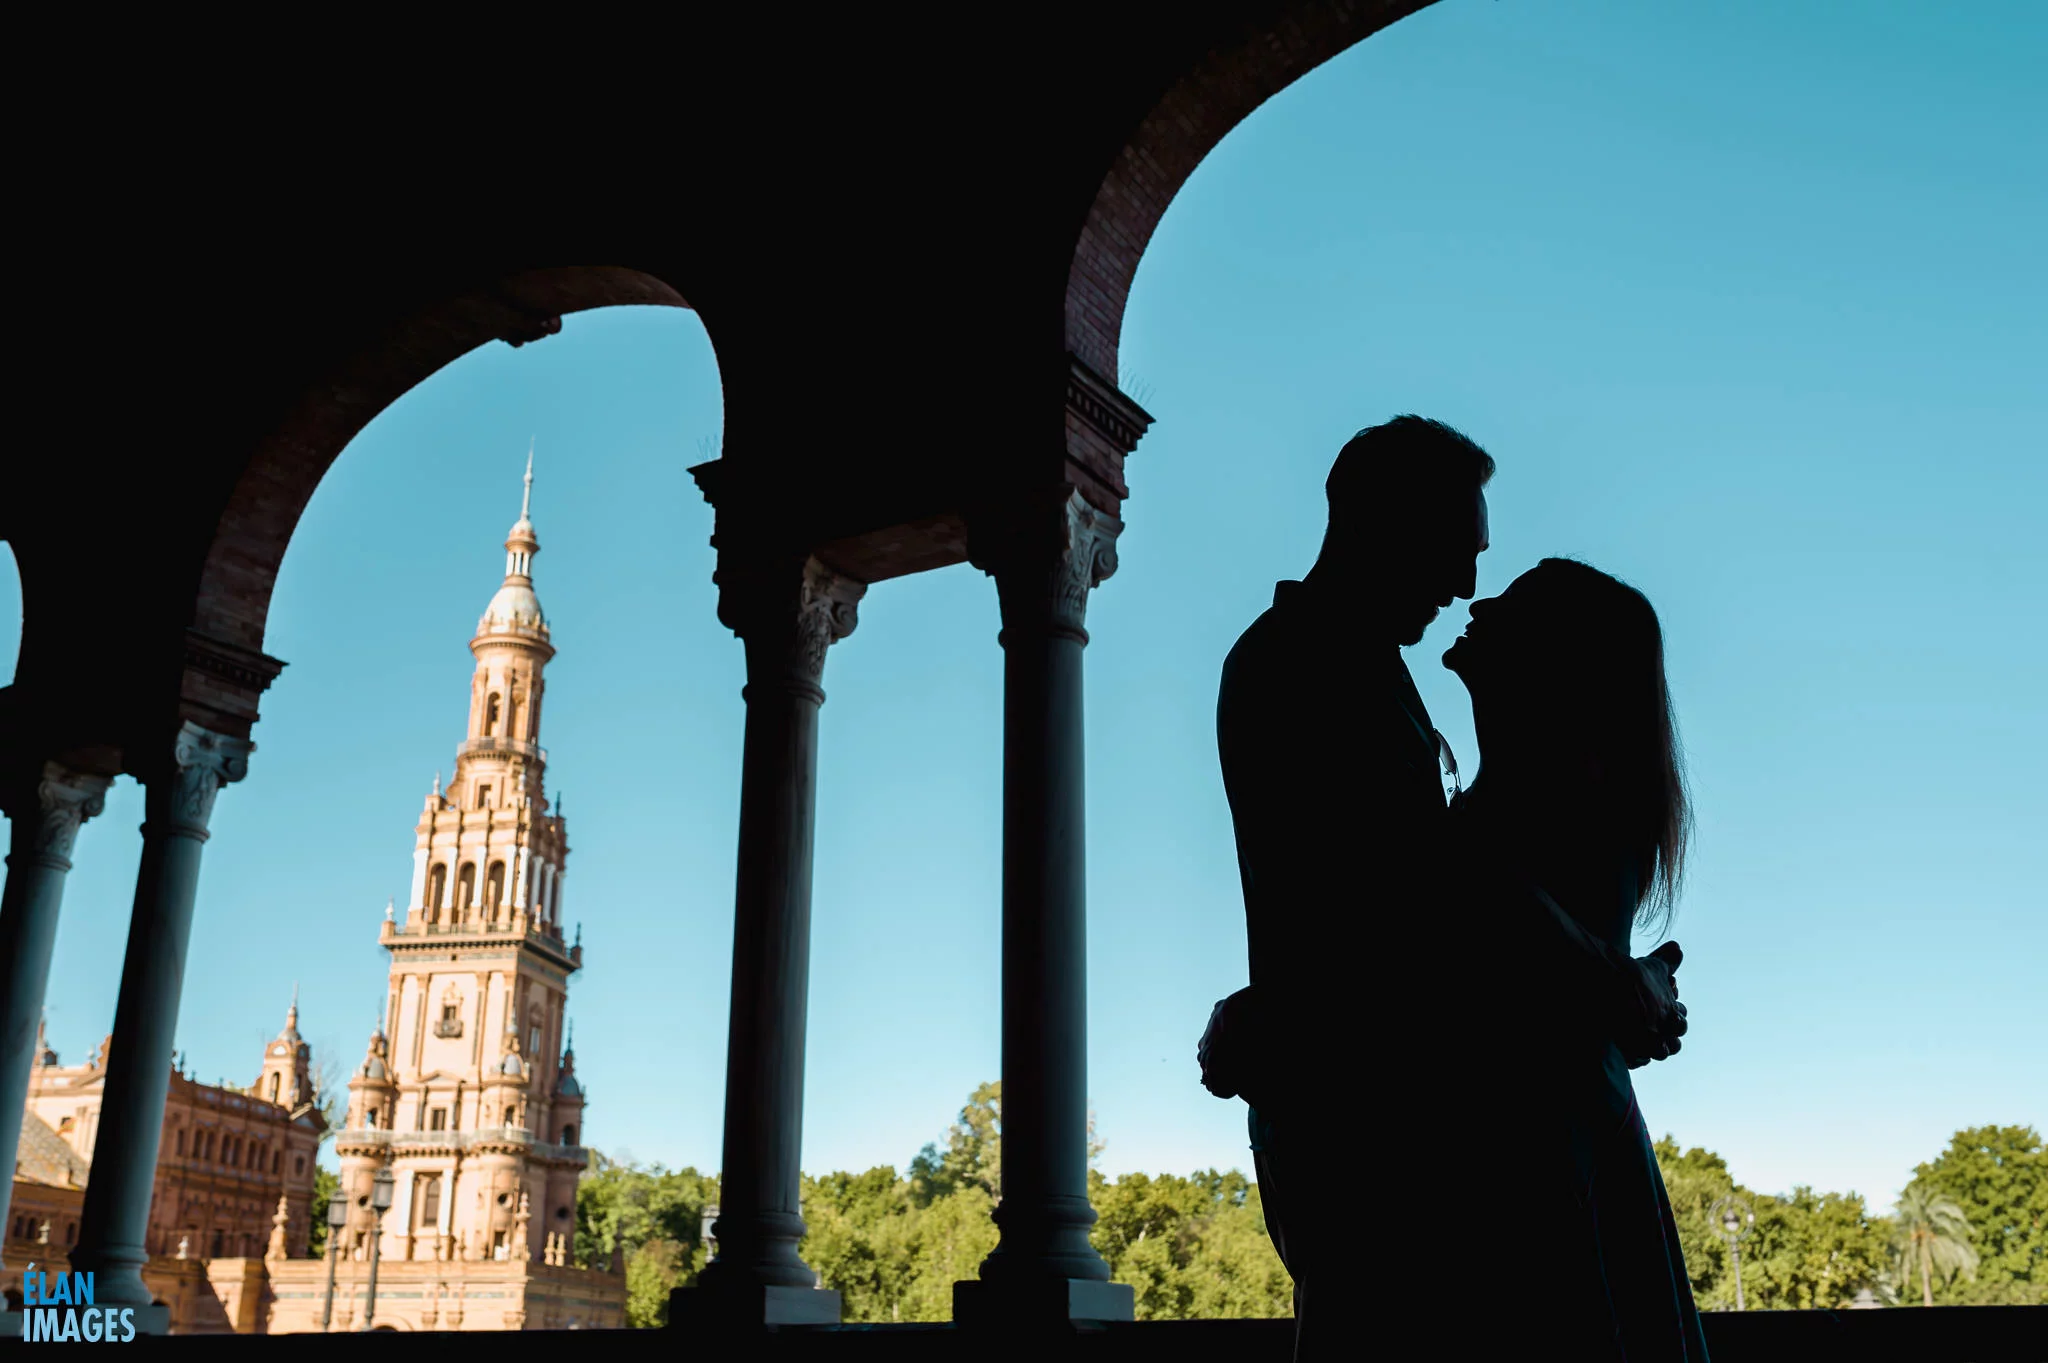 Engagement photos at the Plaza de Espania, Seville